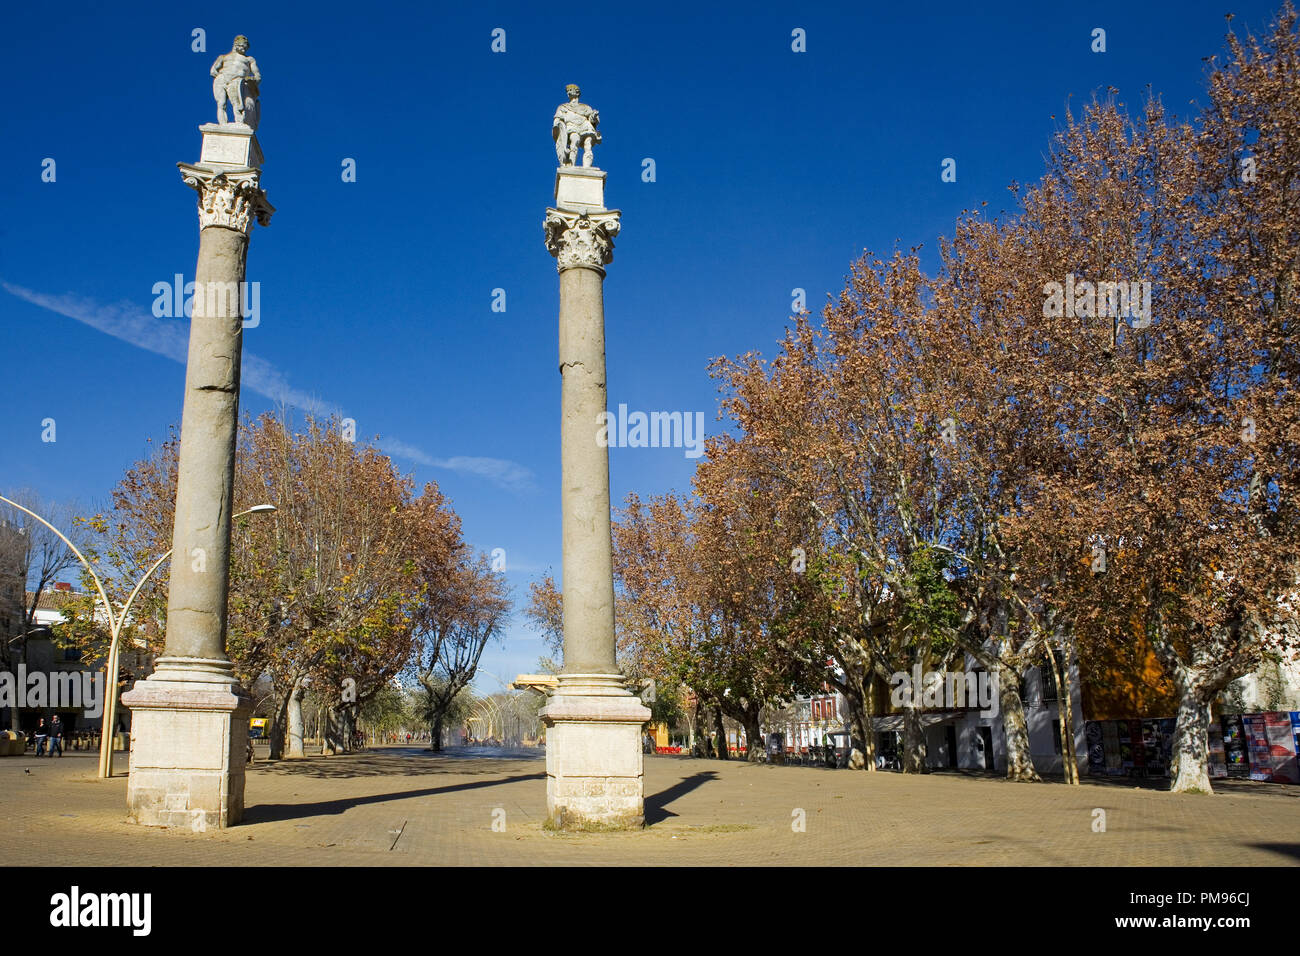 The twin Roman columns with statues of Hercules and Julius Caesar respectively, La Alameda de Hércules, Sevilla, Andalusia, Spain Stock Photo